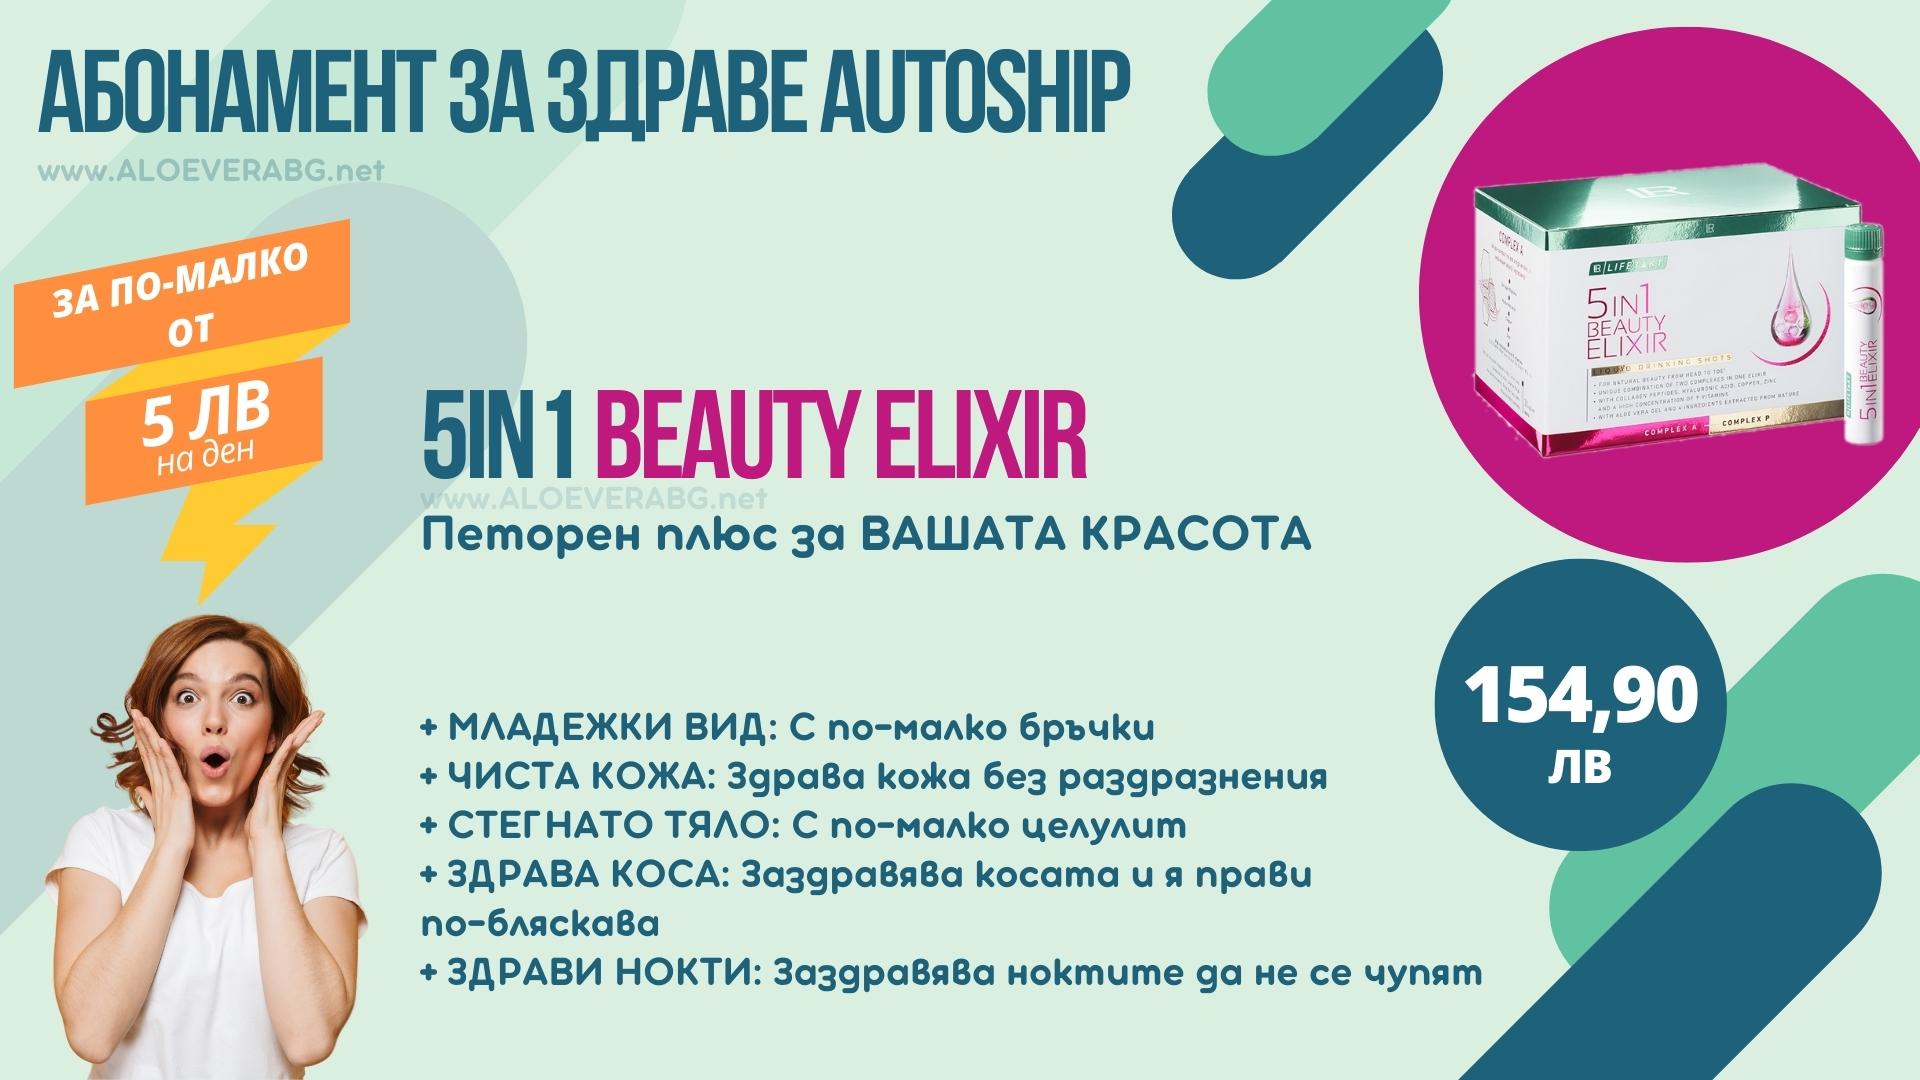 LR Autoship 5in1 Beauty Elixir Абонаментна програма за НАЙ-ИЗГОДНА ЦЕНА!